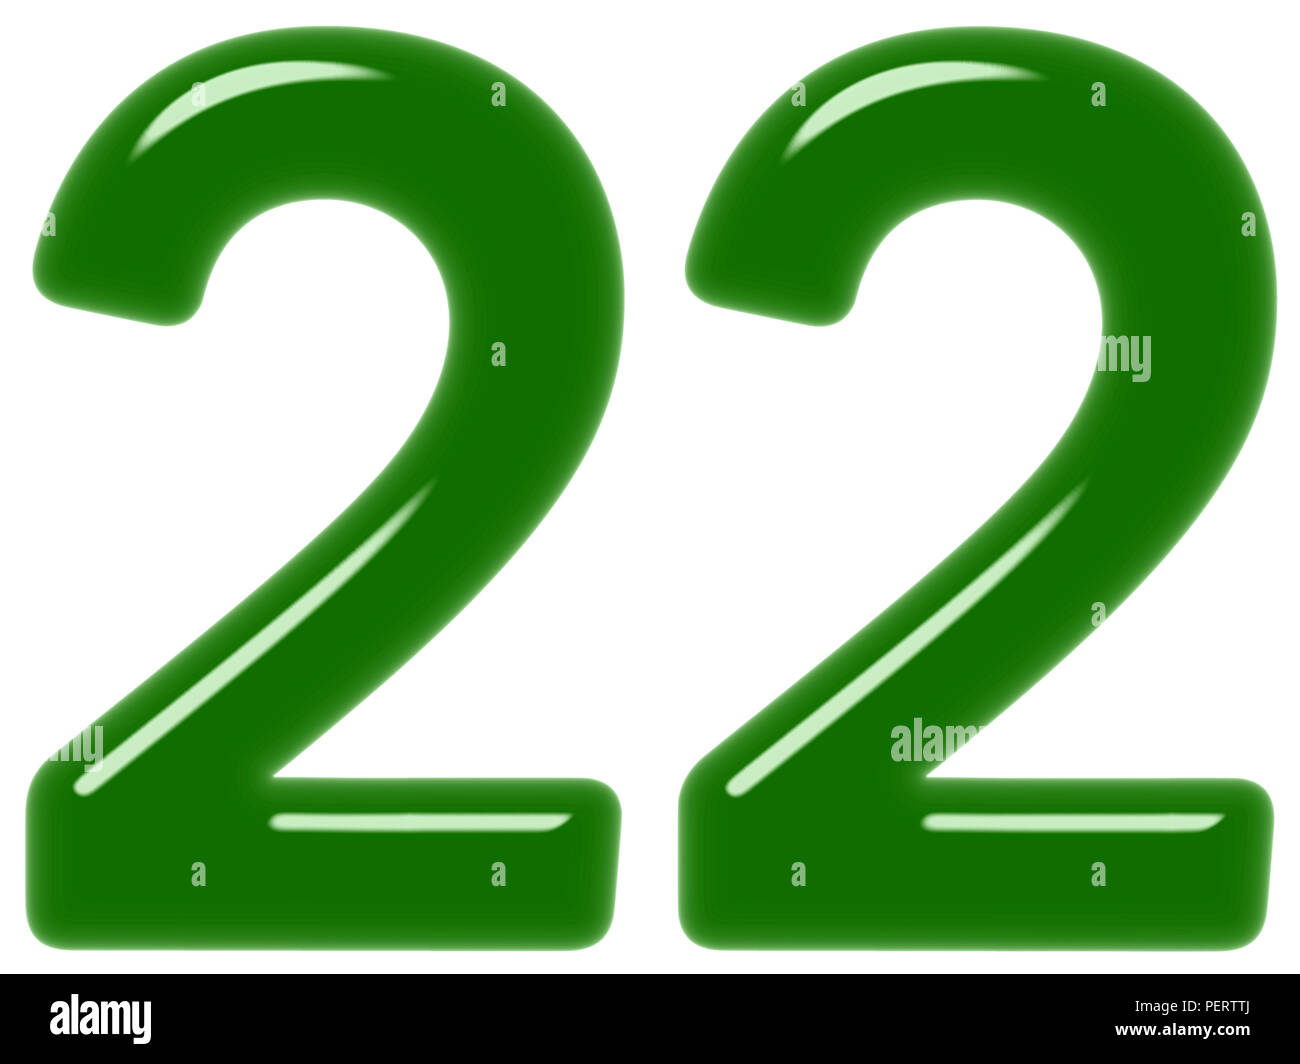 Как выглядит цифра 1 и 2. Цифра 22. Цифра двадцать два. Цифра 22 картинка. Цифра 22 на белом фоне.